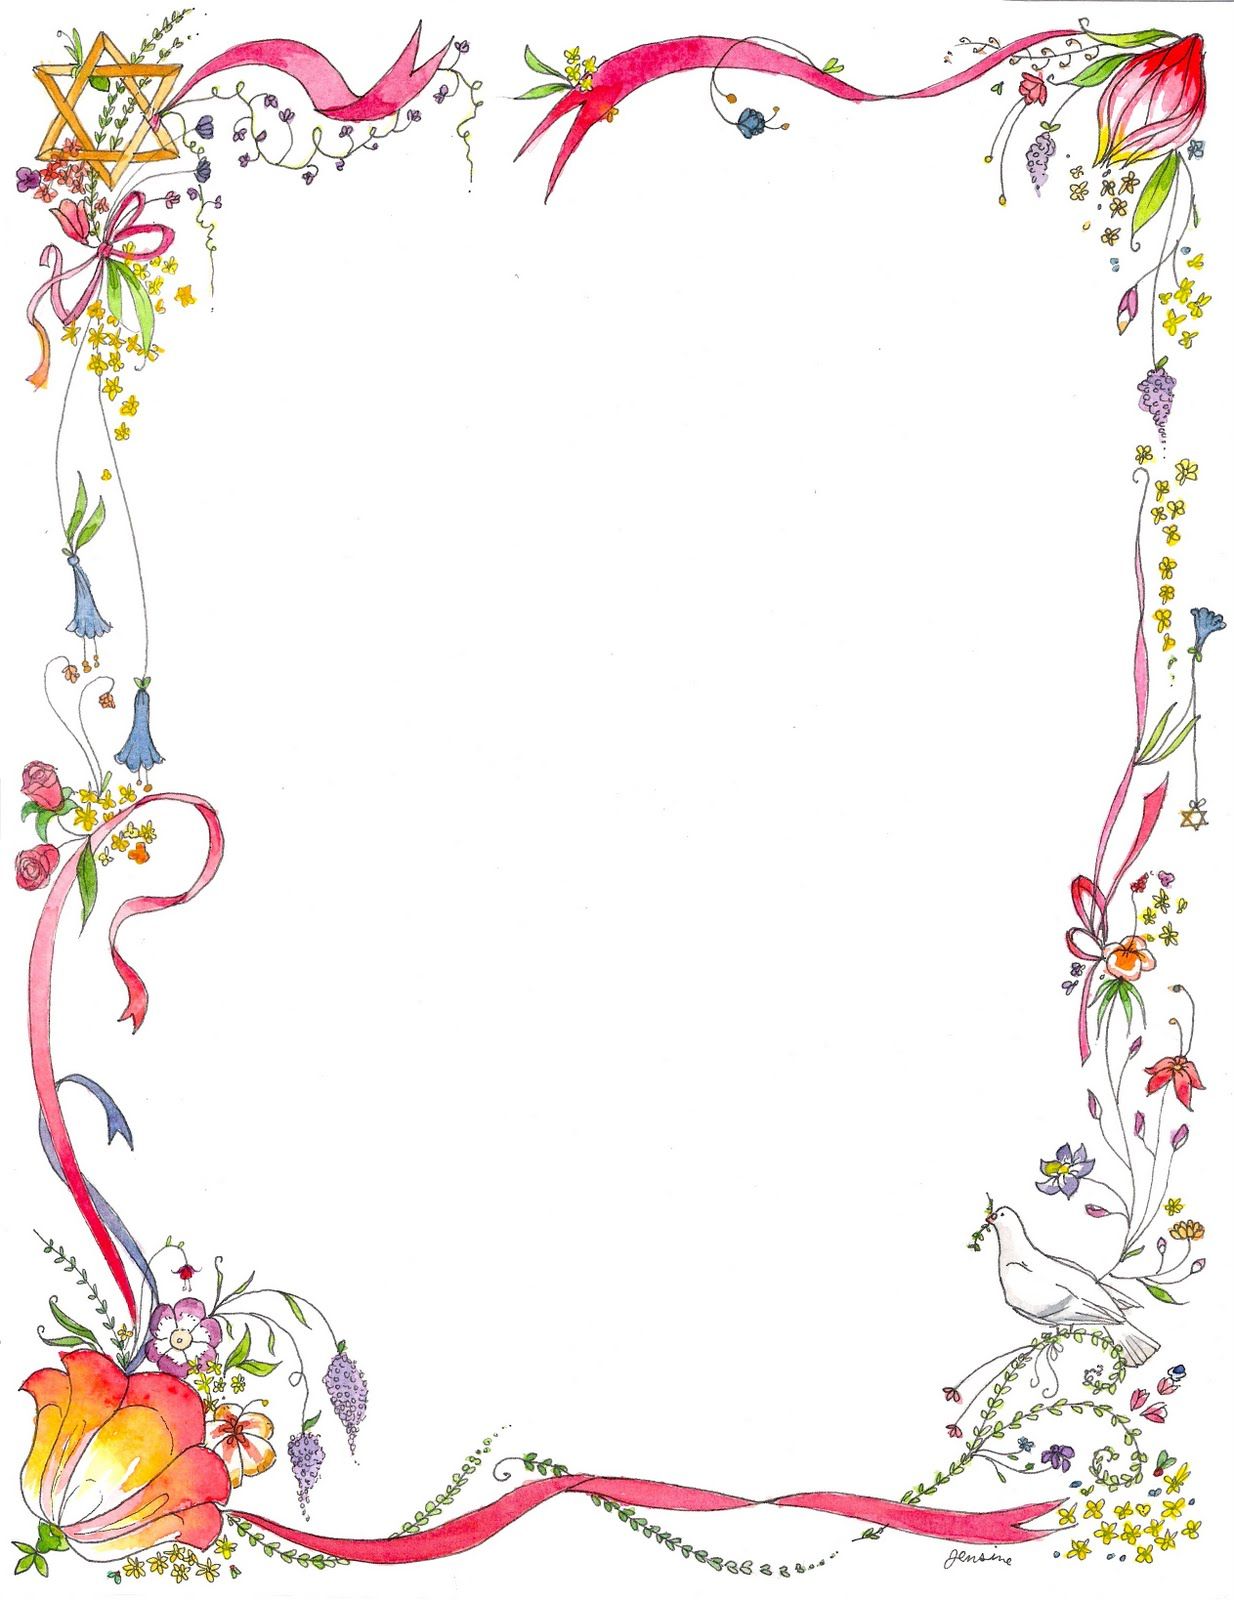 Latest Flowers Border Design | Arts | Pinterest | Border design ...